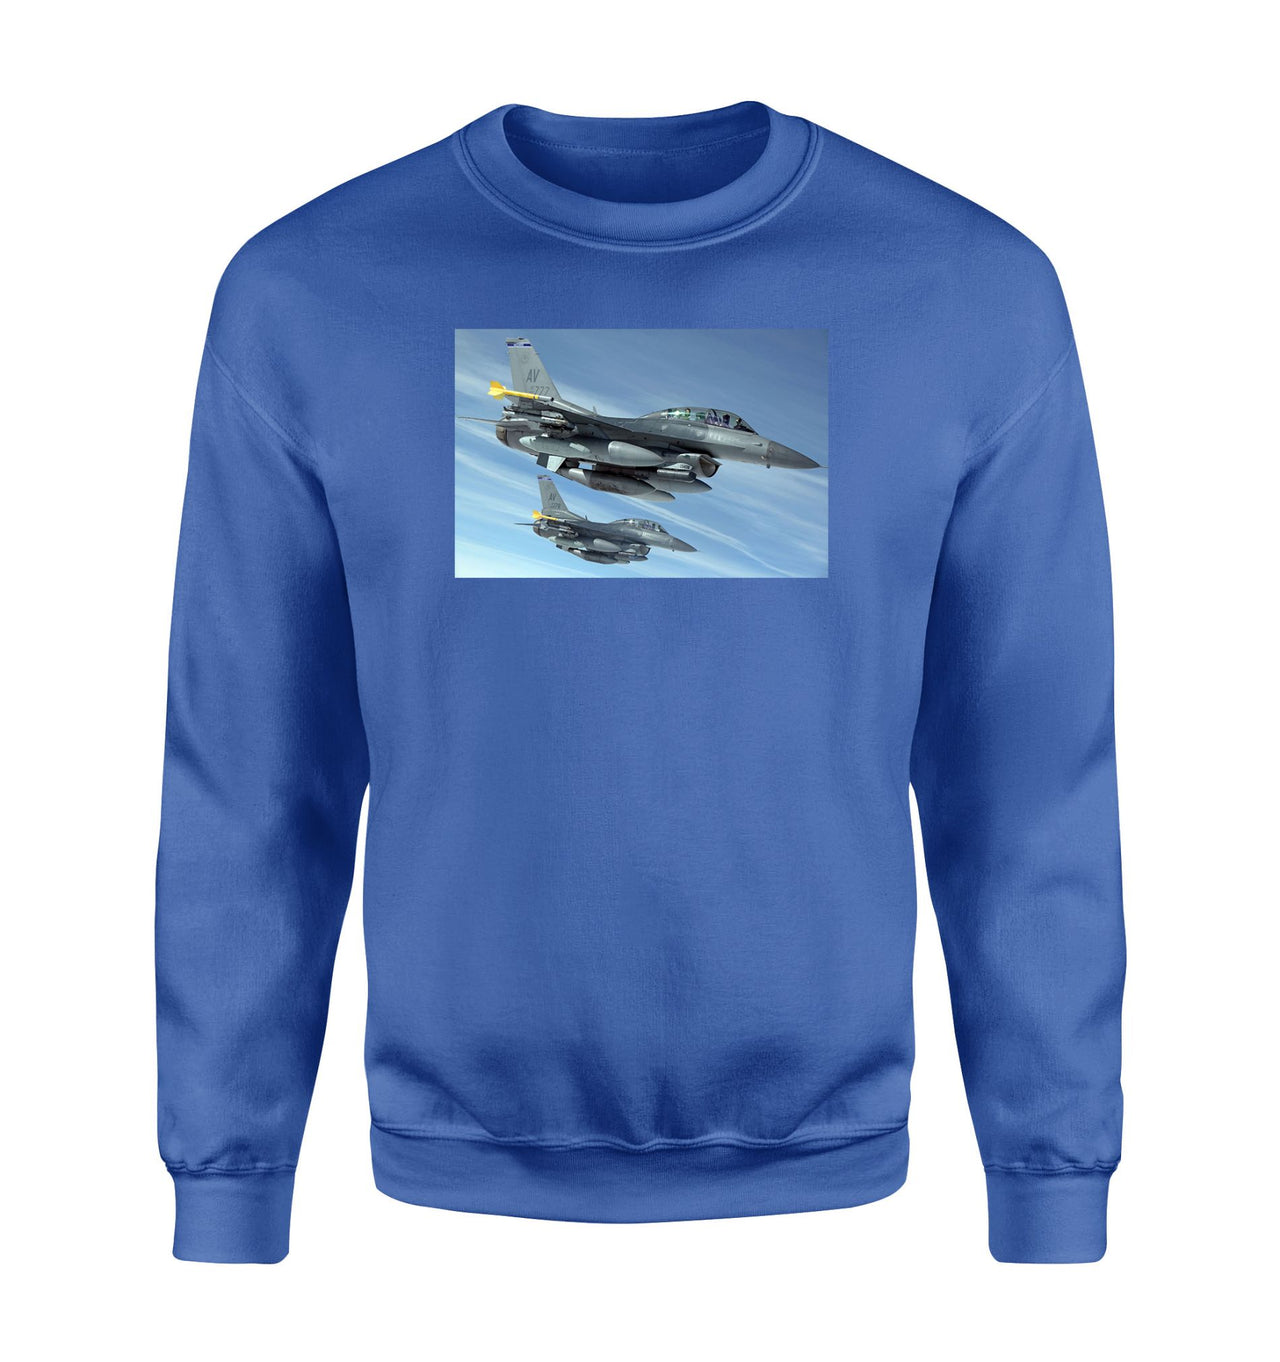 Two Fighting Falcon Designed Sweatshirts